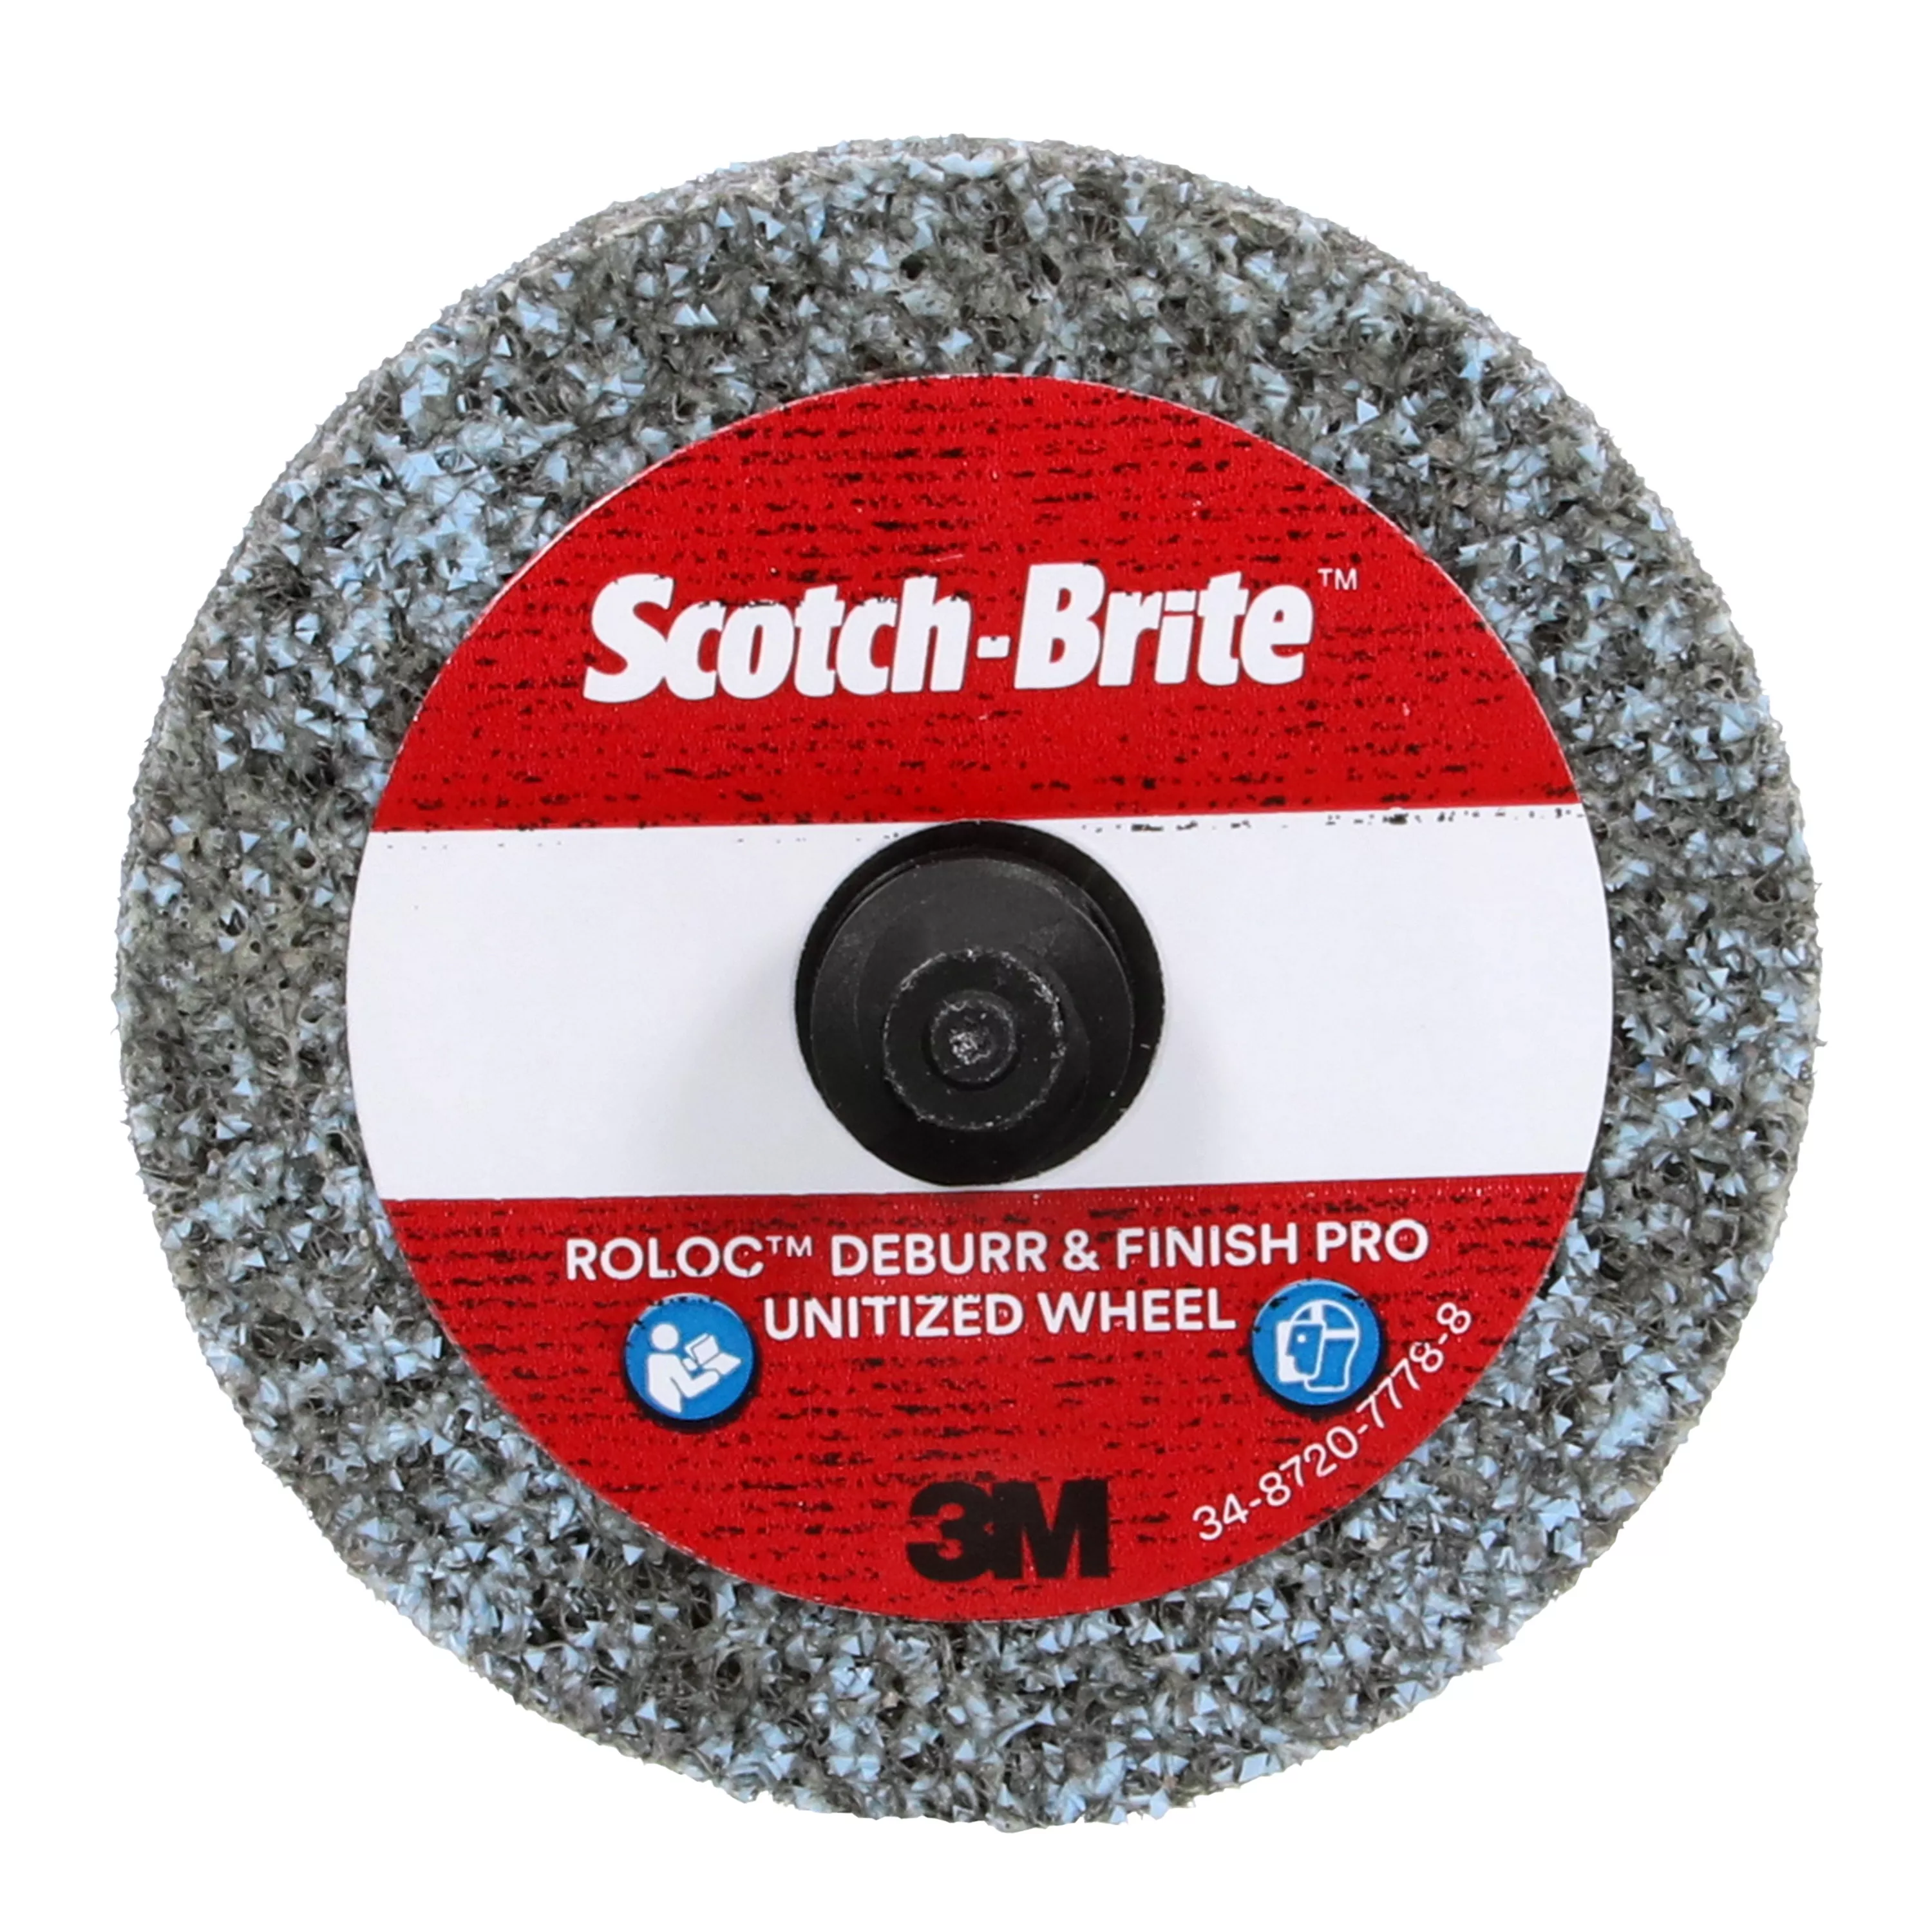 SKU 7100109131 | Scotch Brite™ Roloc™ Deburr & Finish PRO Unitized Wheel